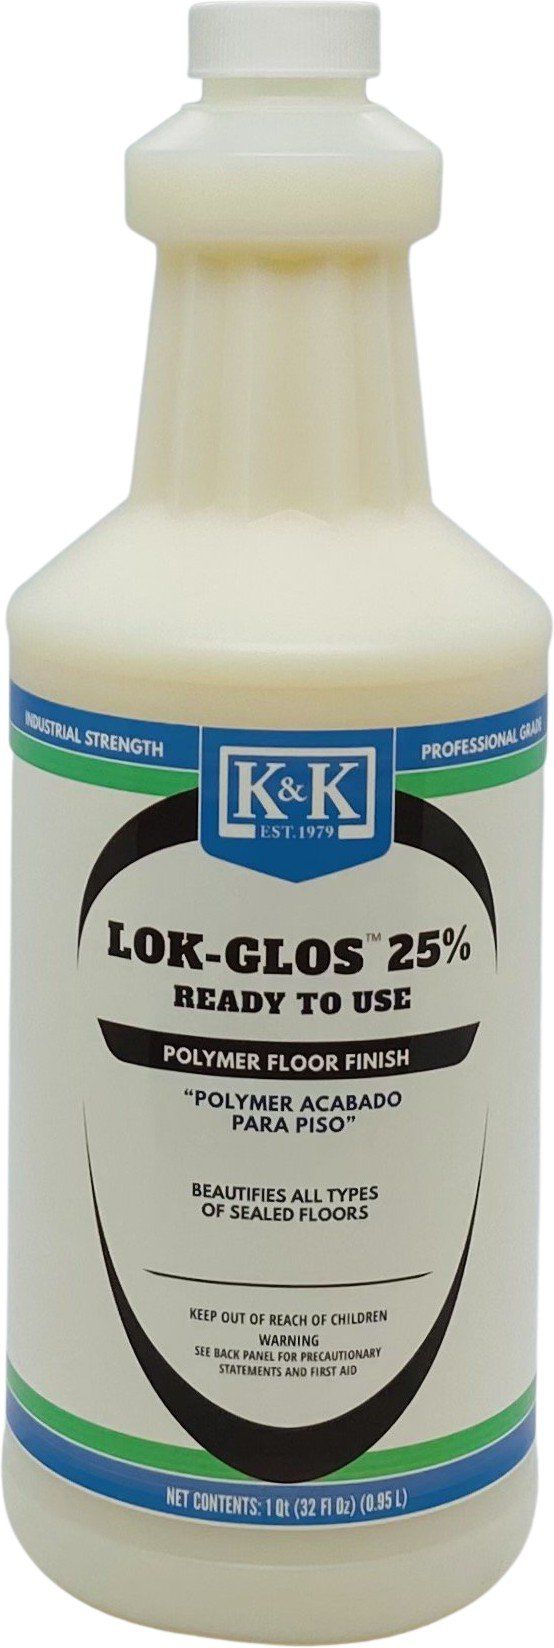 LOK-GLOS | RTU - High Gloss Floor Finish